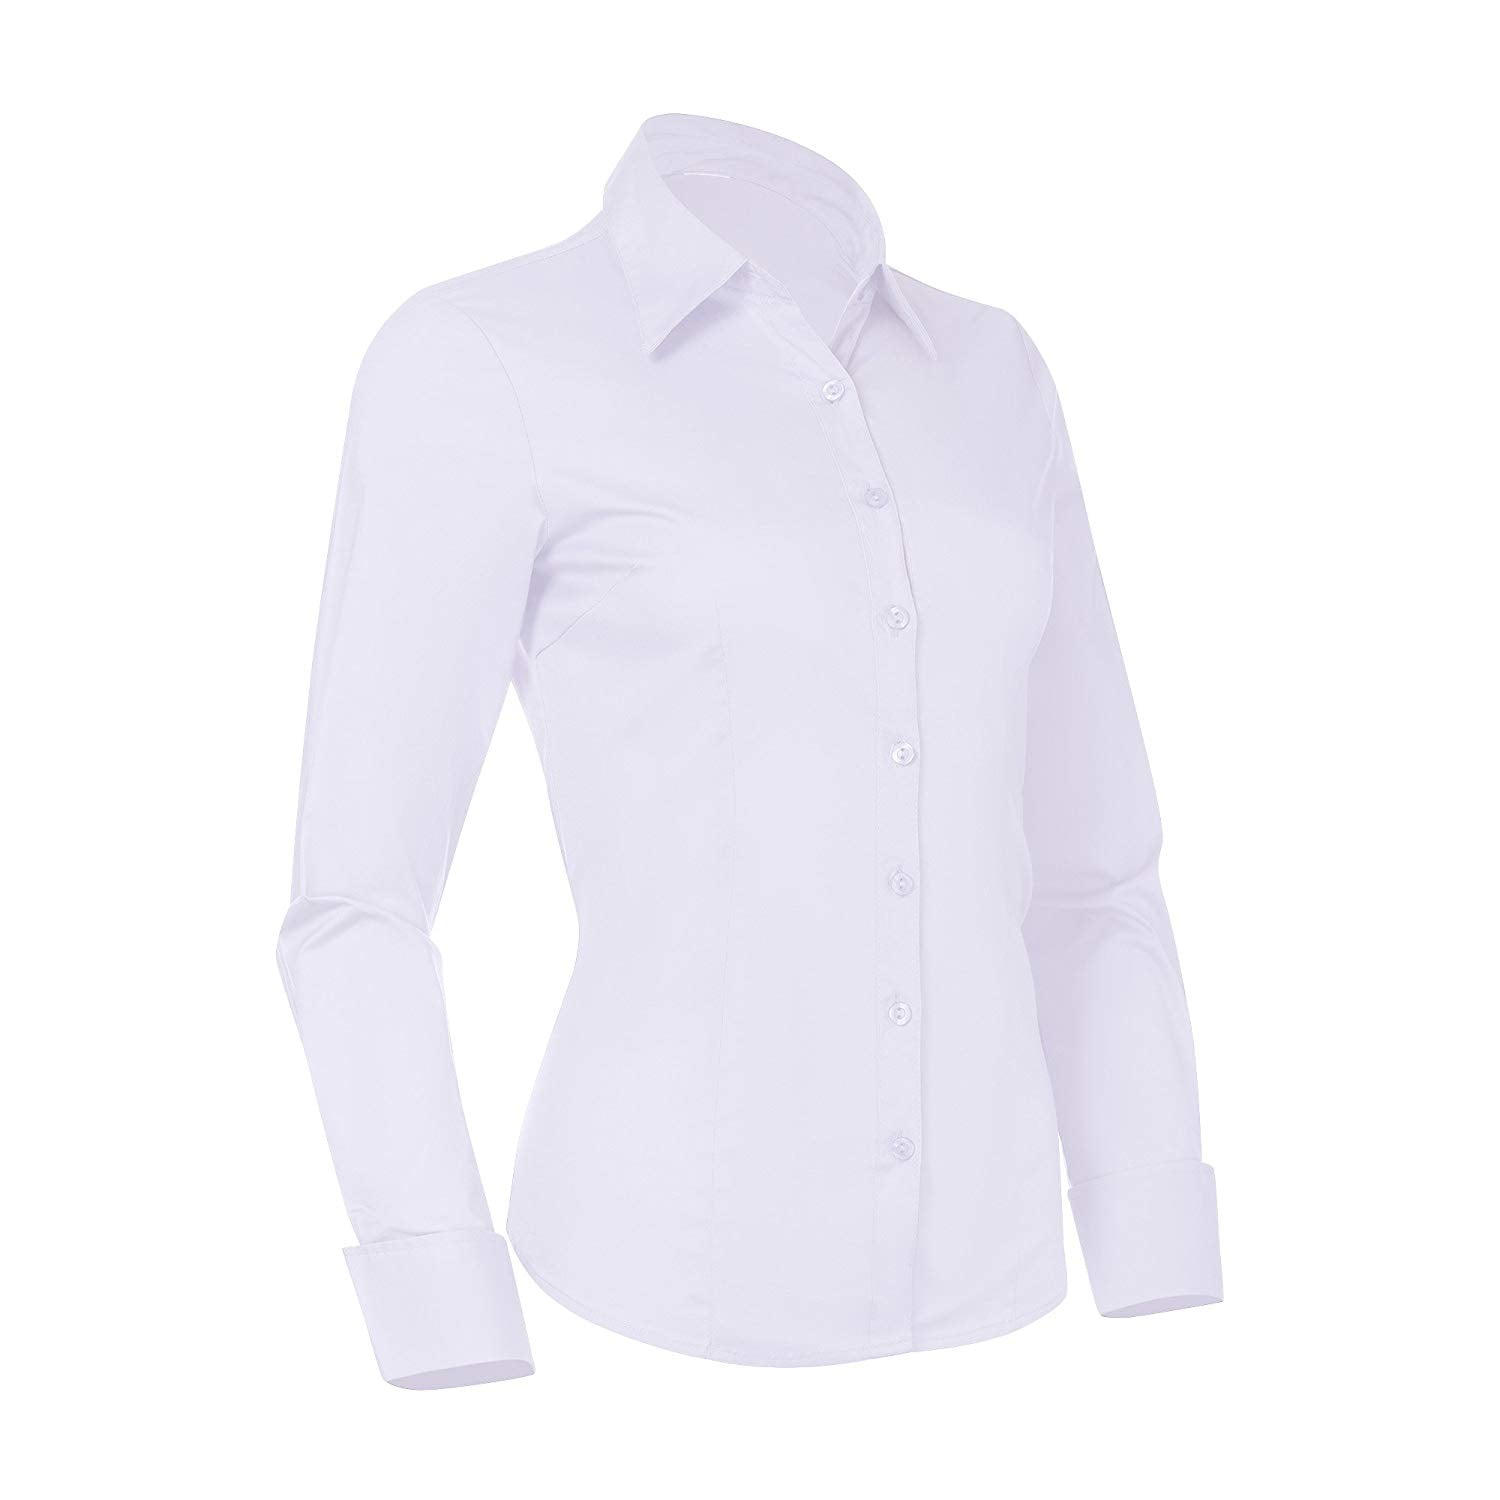 Womens Button-Down Shirts - Walmart.com ...